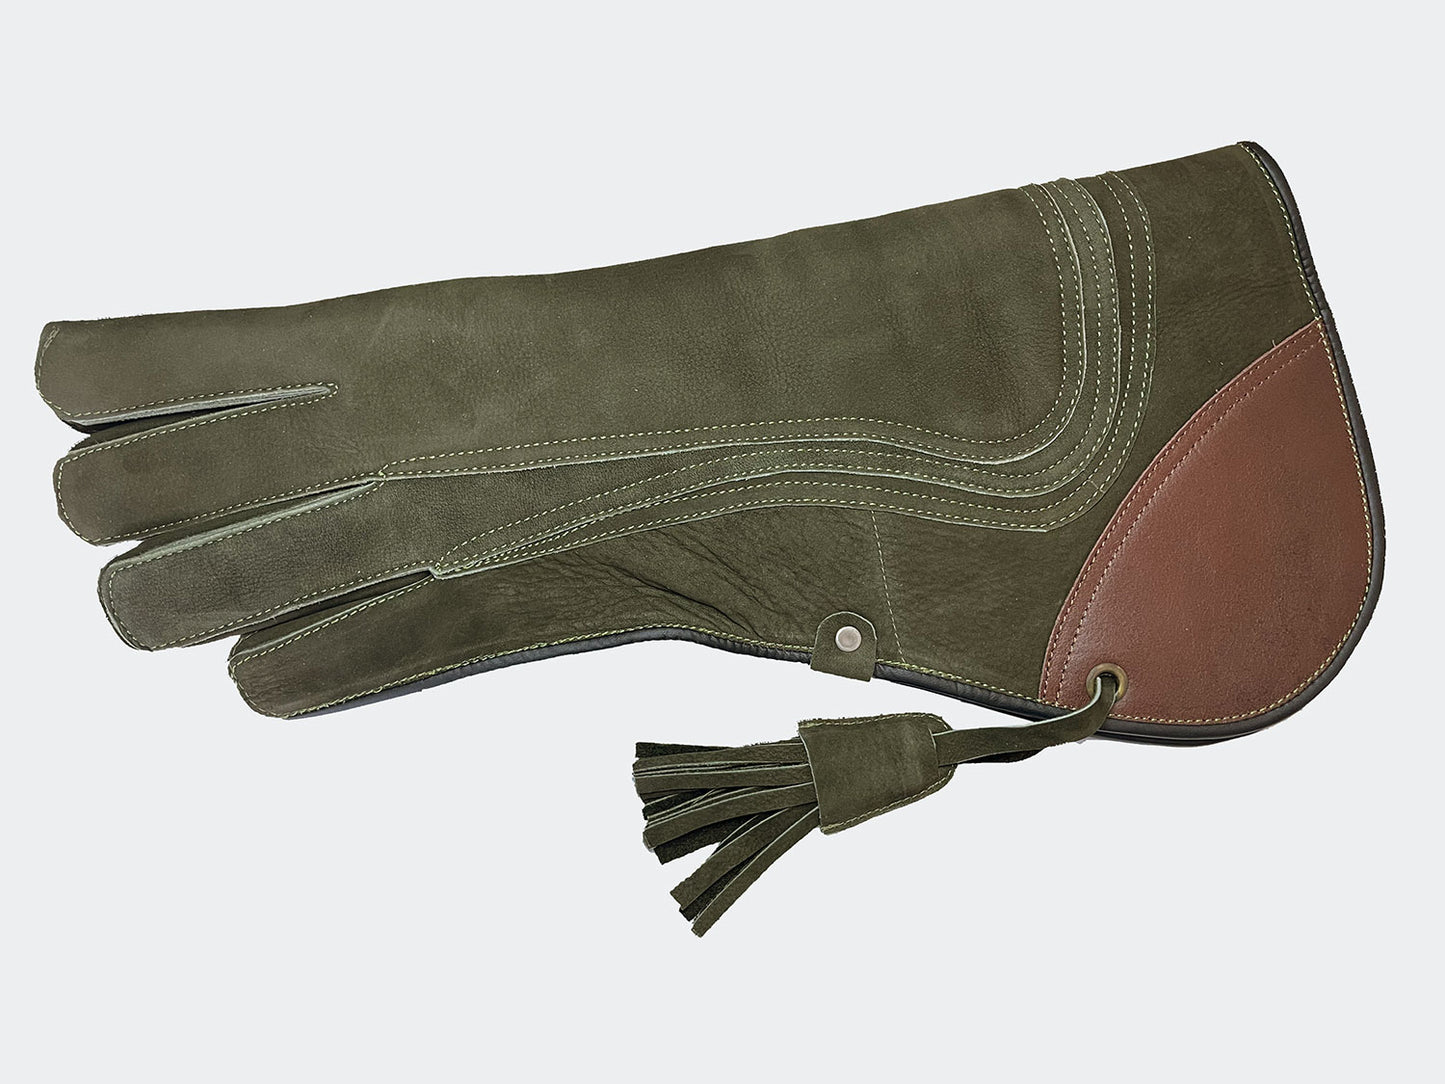 Aguila-Extreme Falconry Glove